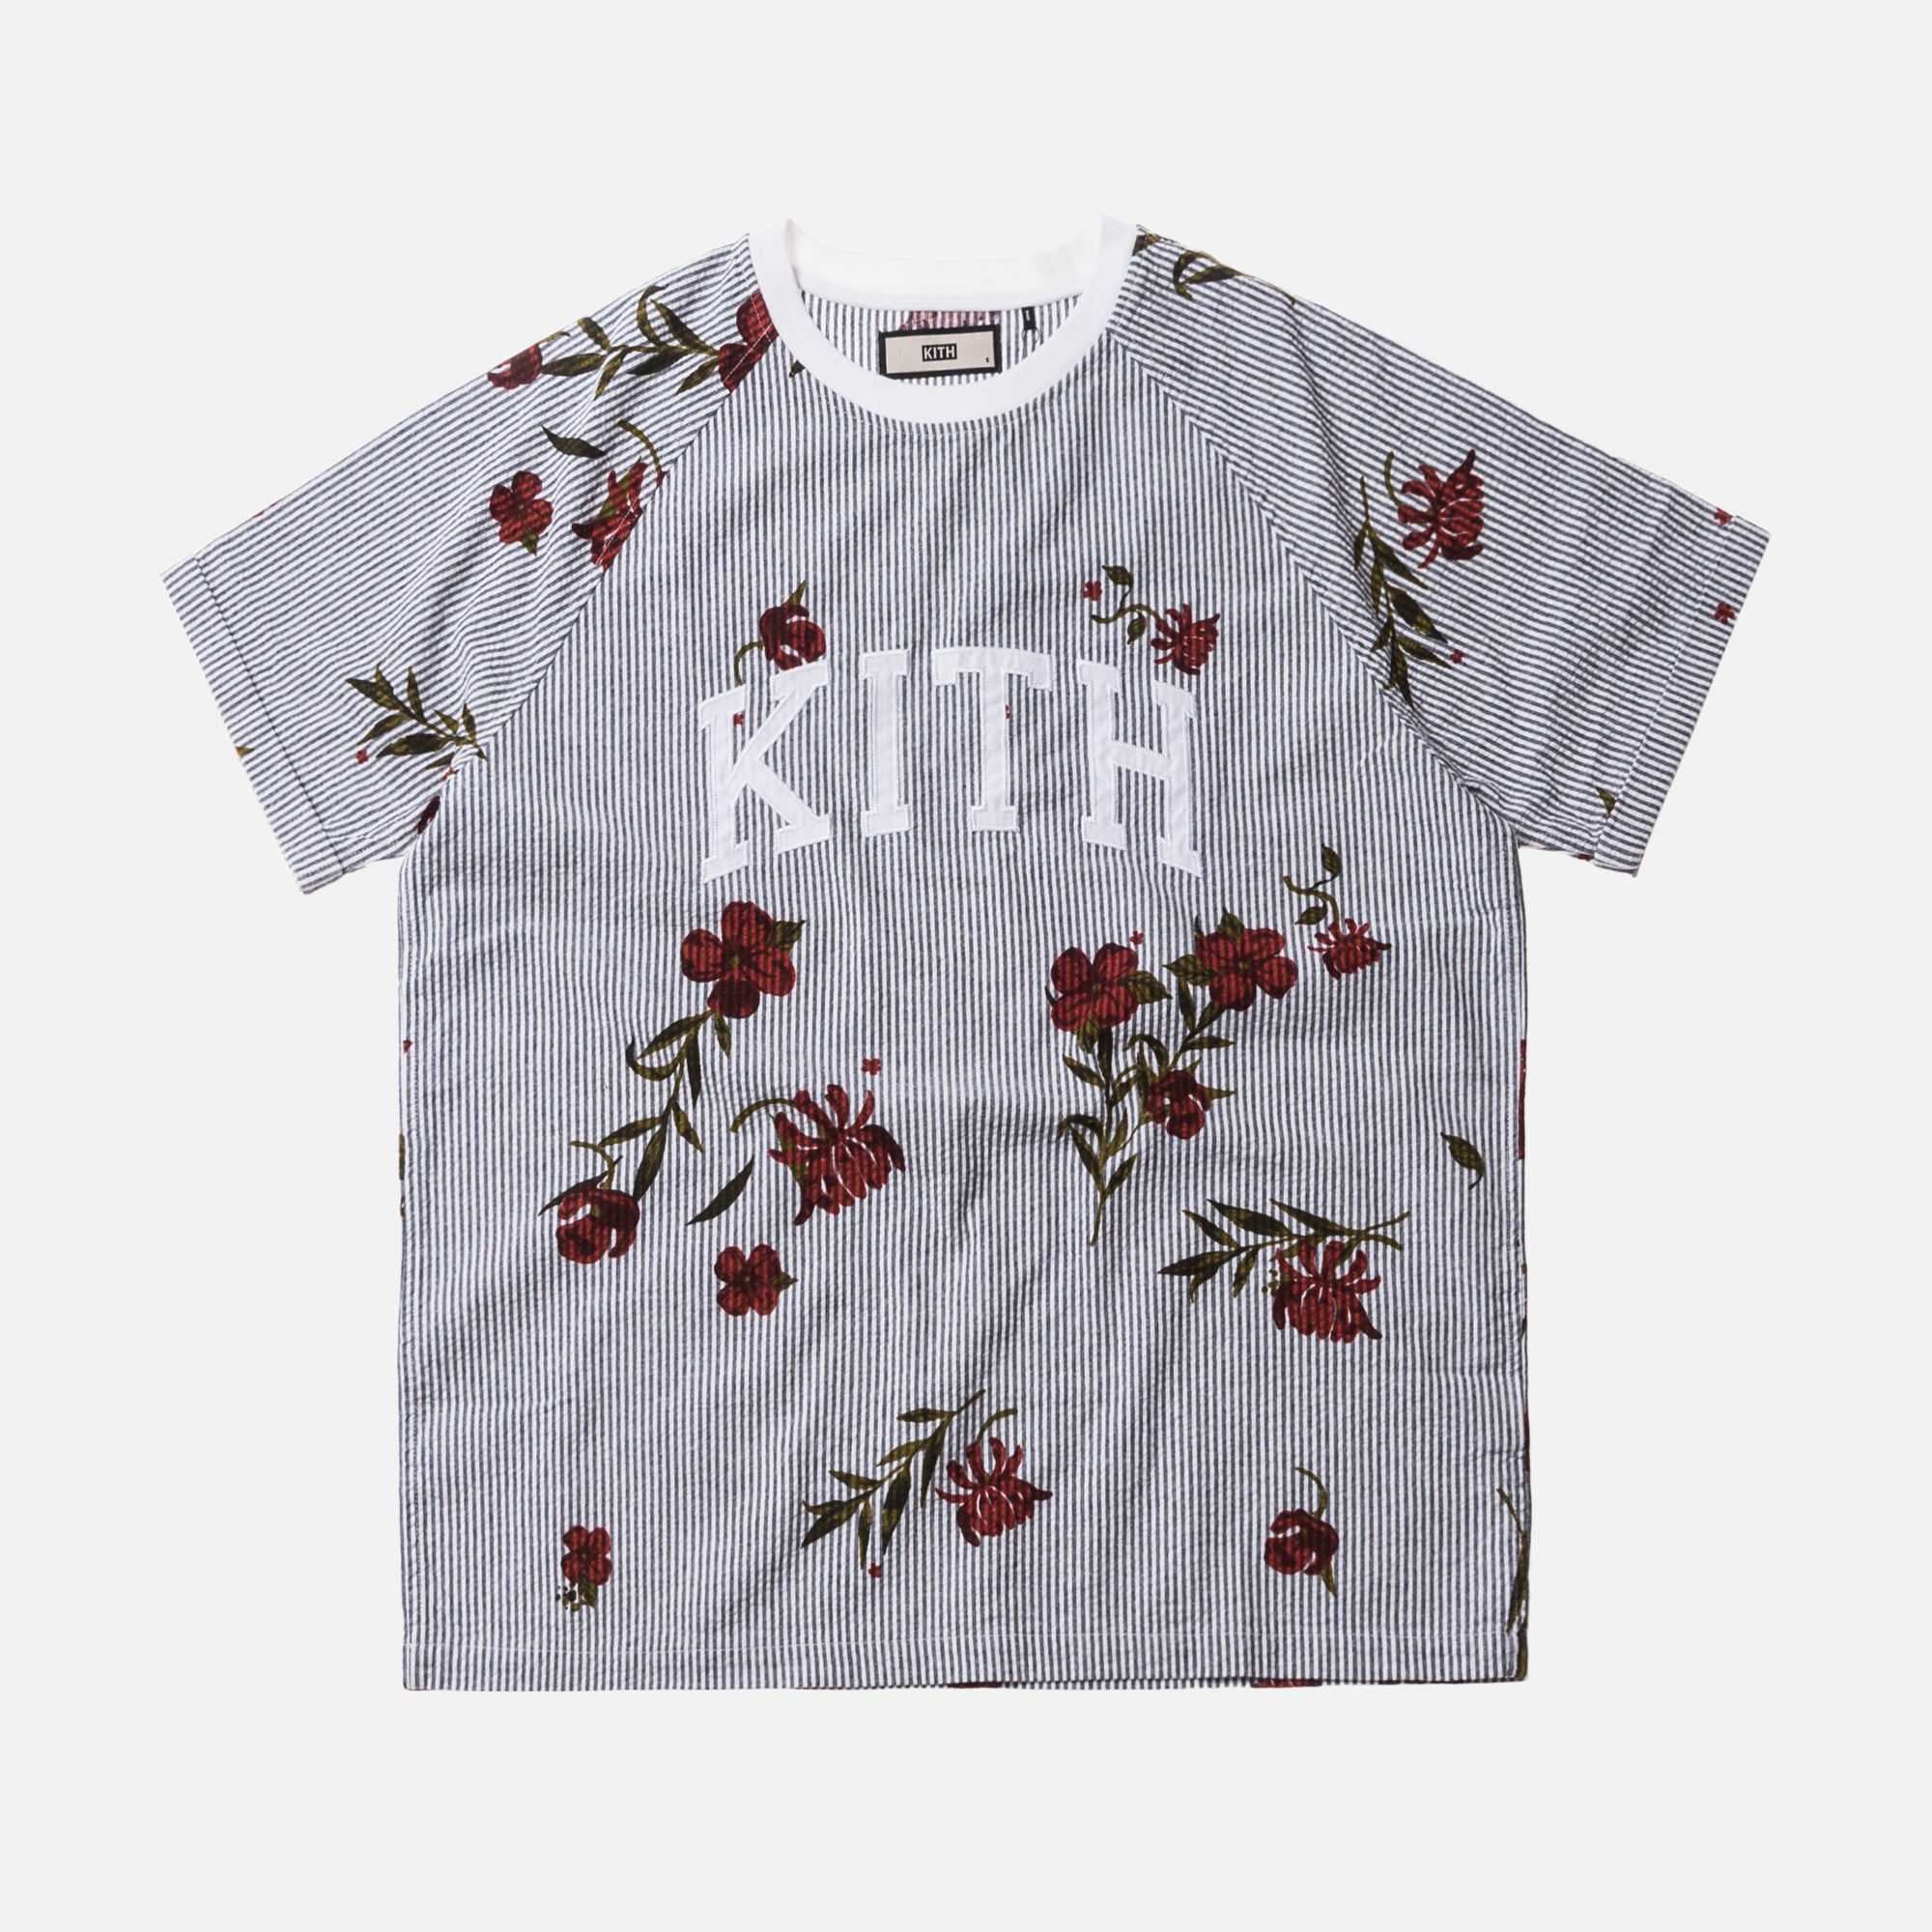 Cockney Rebel Fashions. Ted Baker Kyme Flower Print Shirt